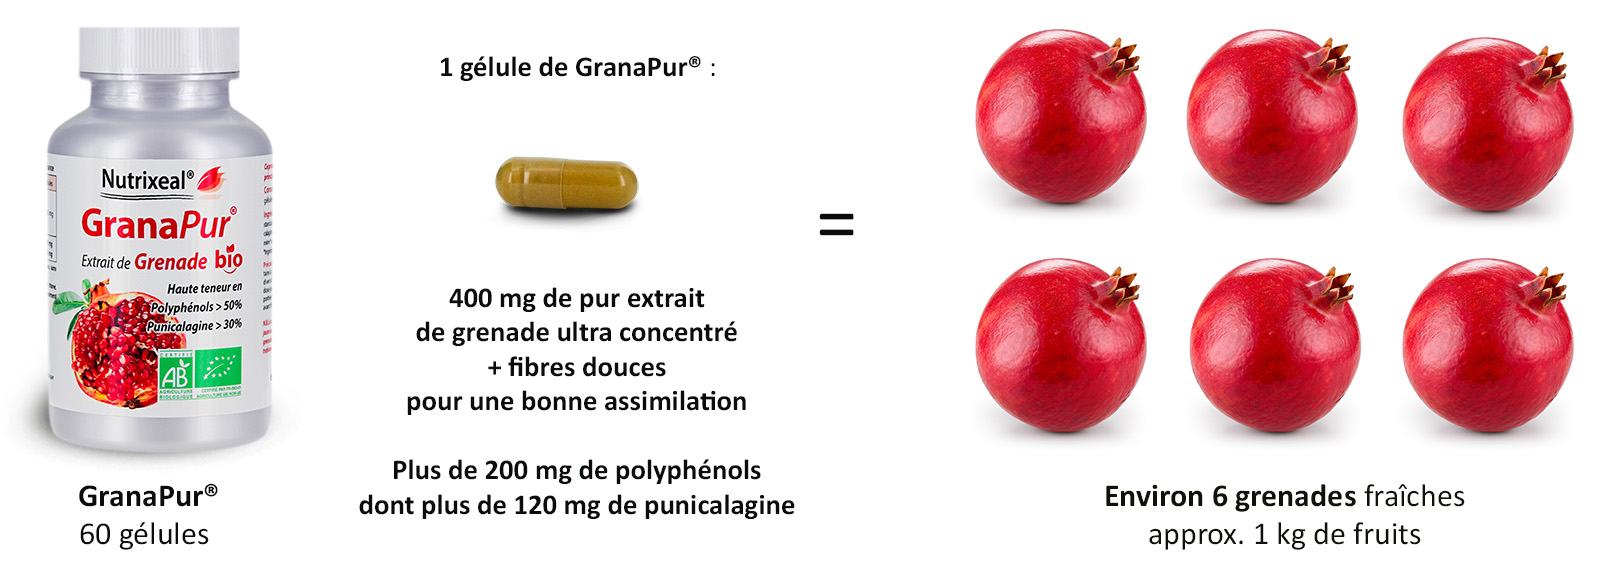 Notre complément alimentaire Grenade BIO contient un extrait ultra concentré de grenade bio